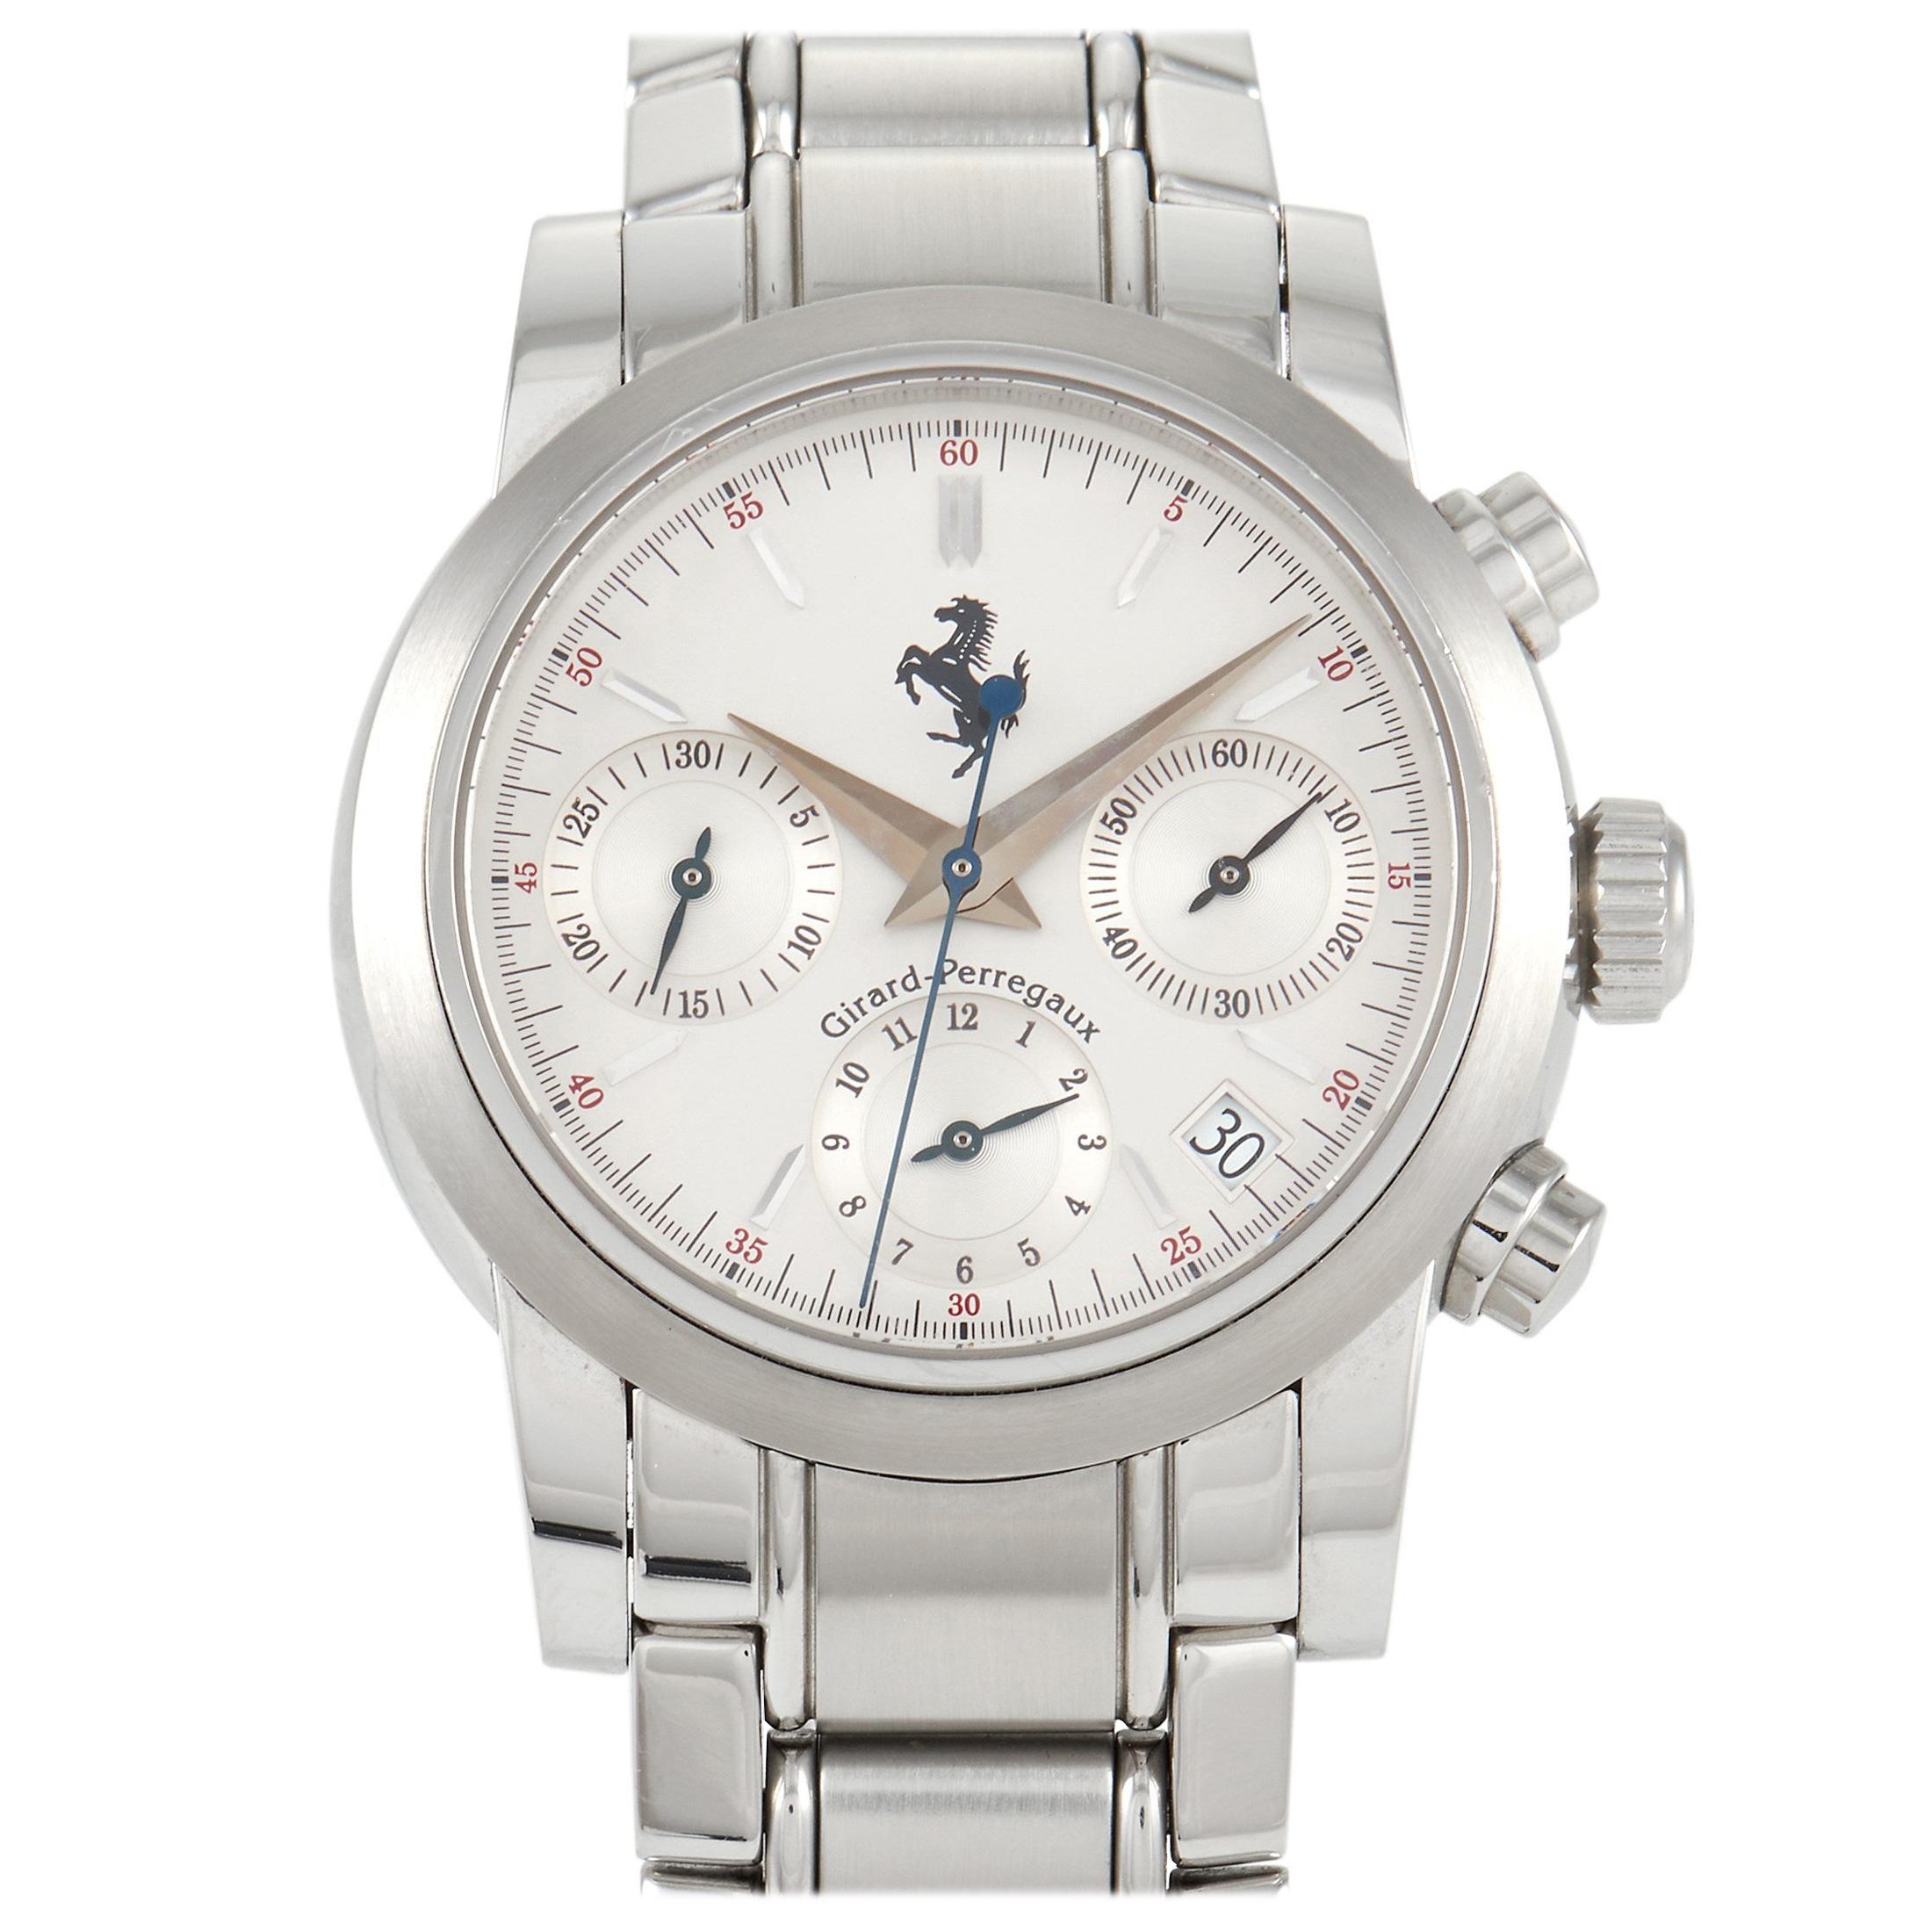 Girard Perregaux Ferrari Chronograph Watch 8020